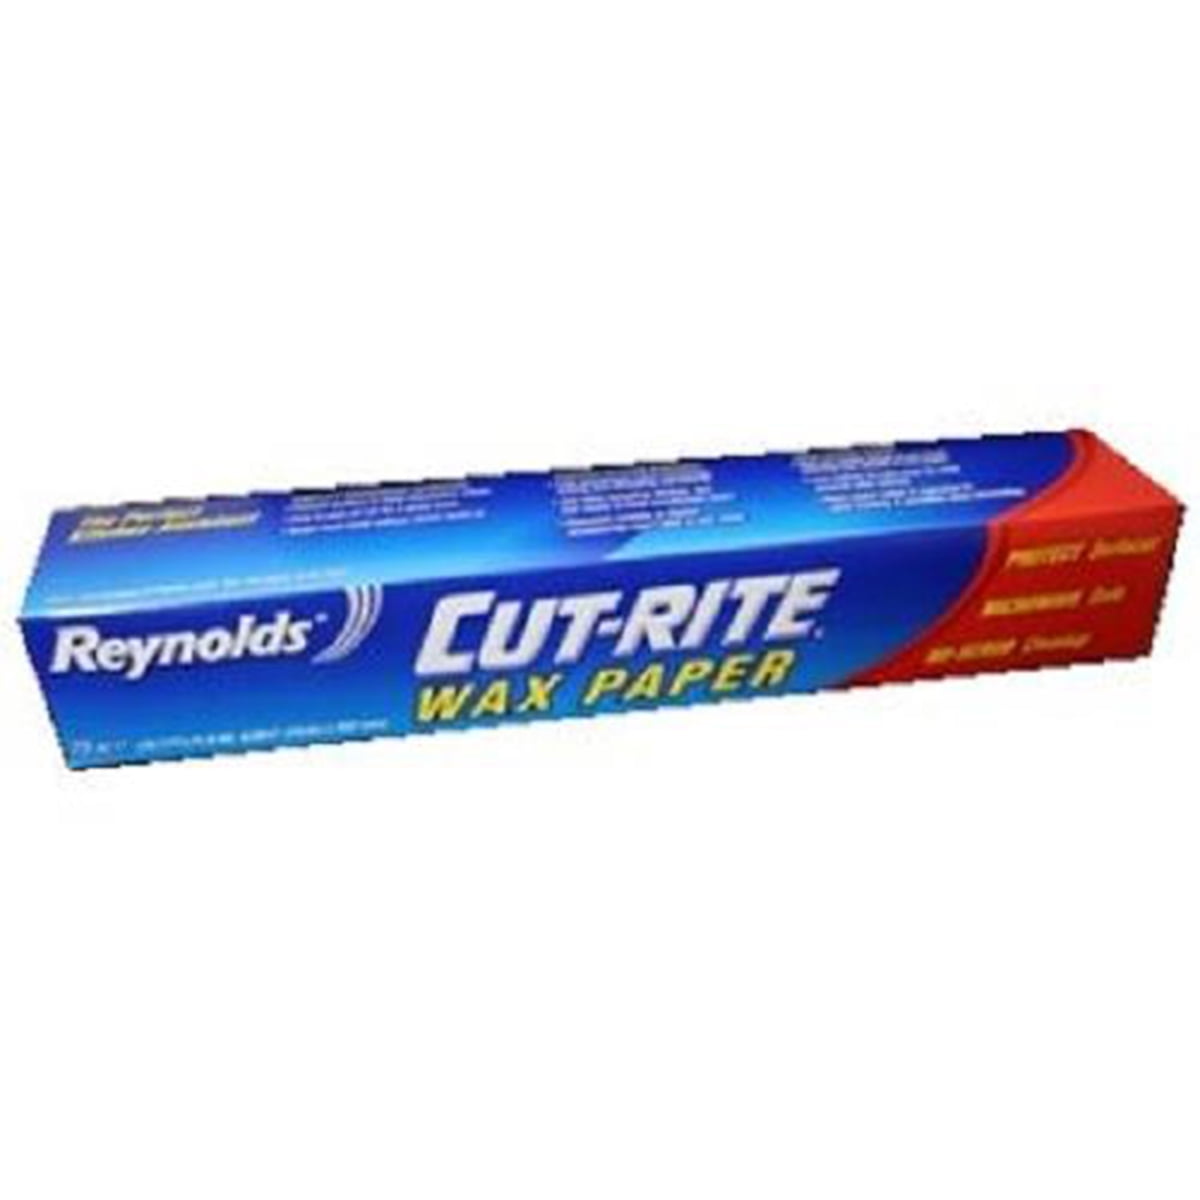 Cut-Rite Wax Paper by Reynolds 75 sq.ft